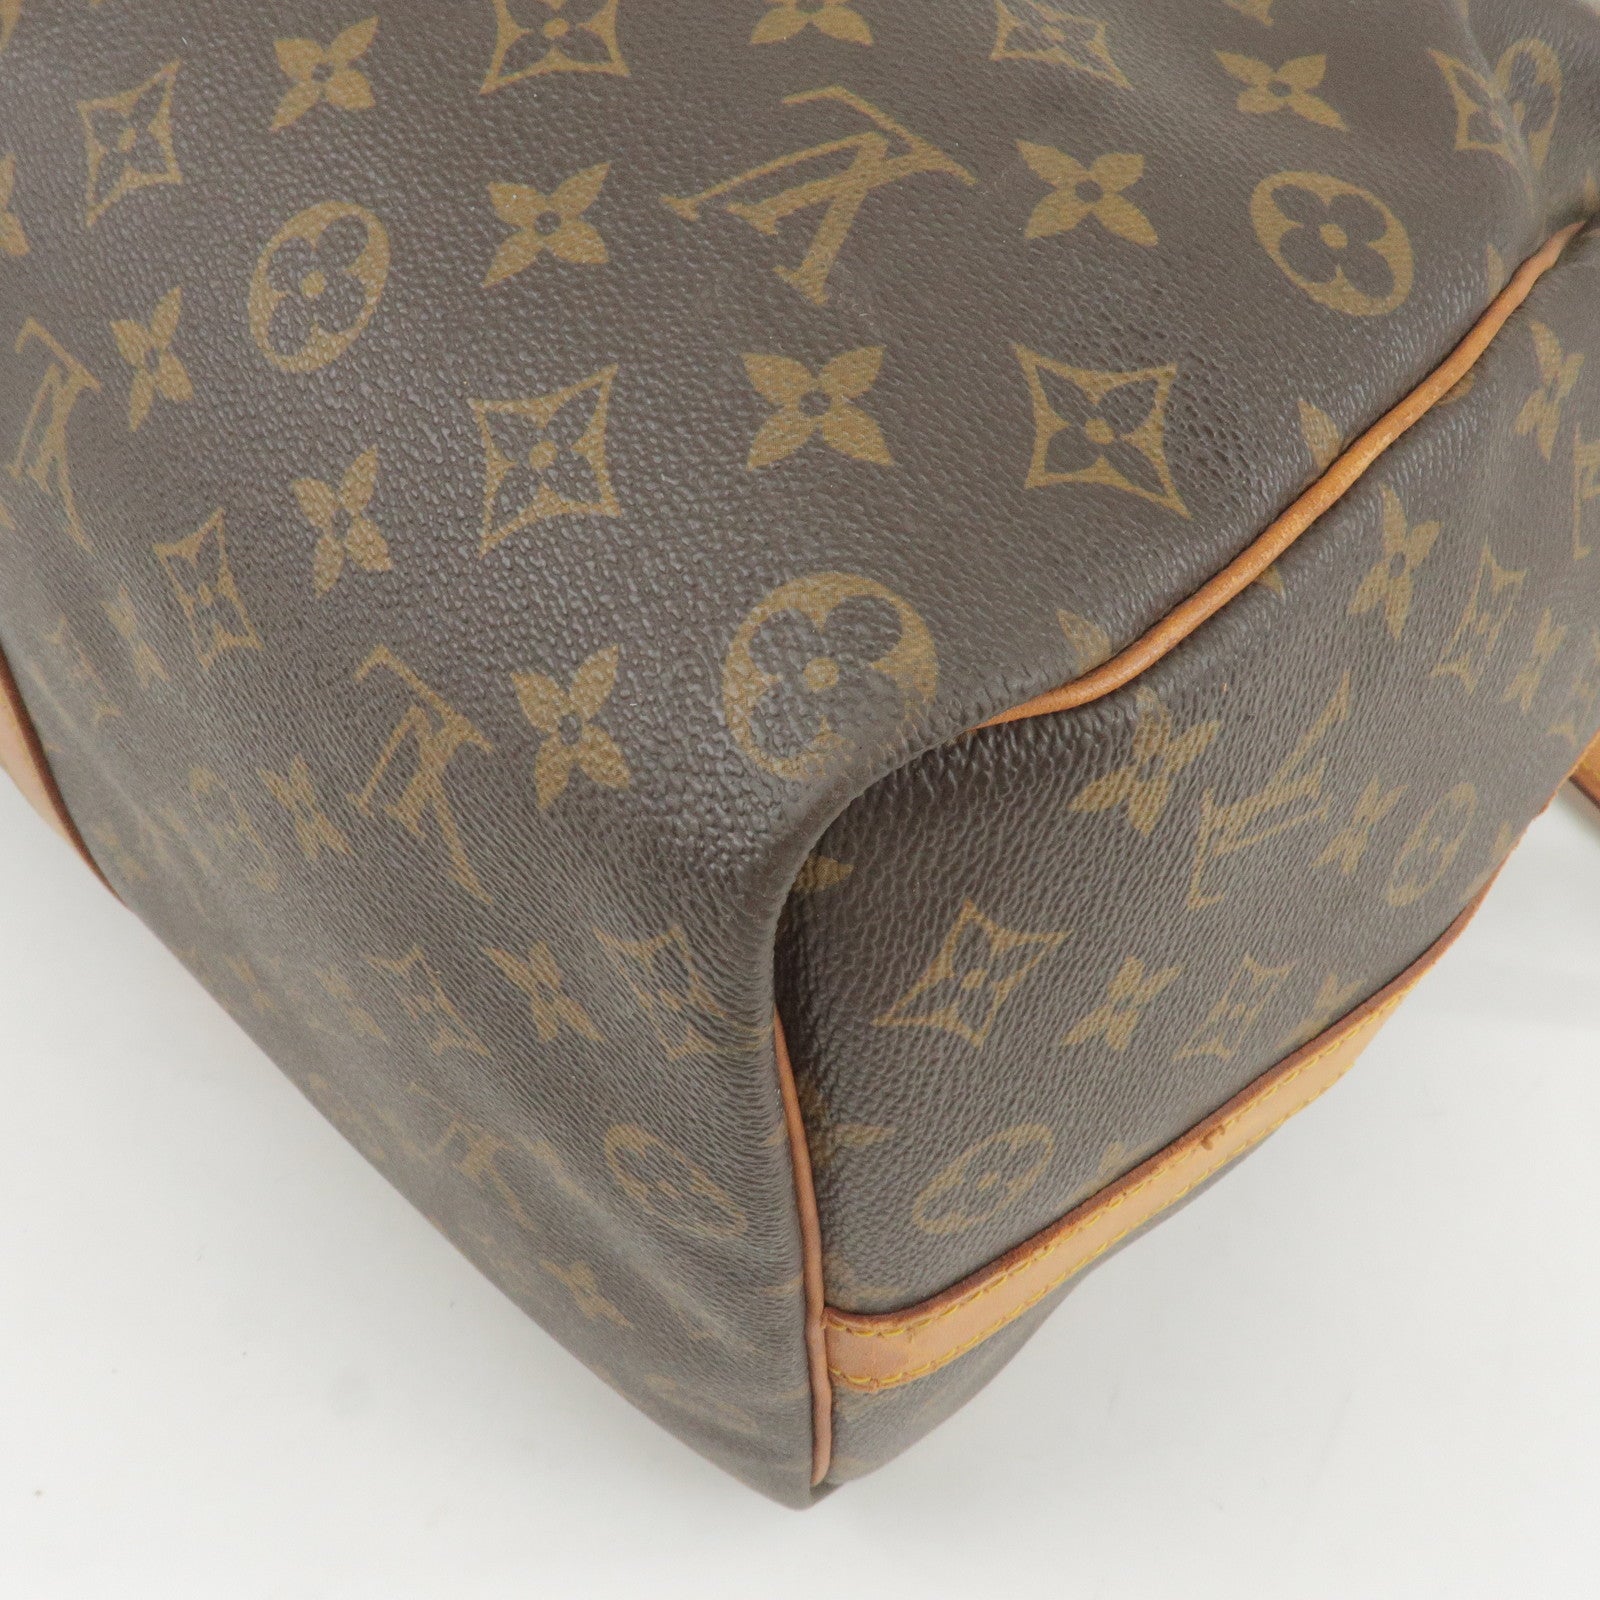 Louis Vuitton 2000 Pre-owned Monogram Speedy 30 Handbag - Brown